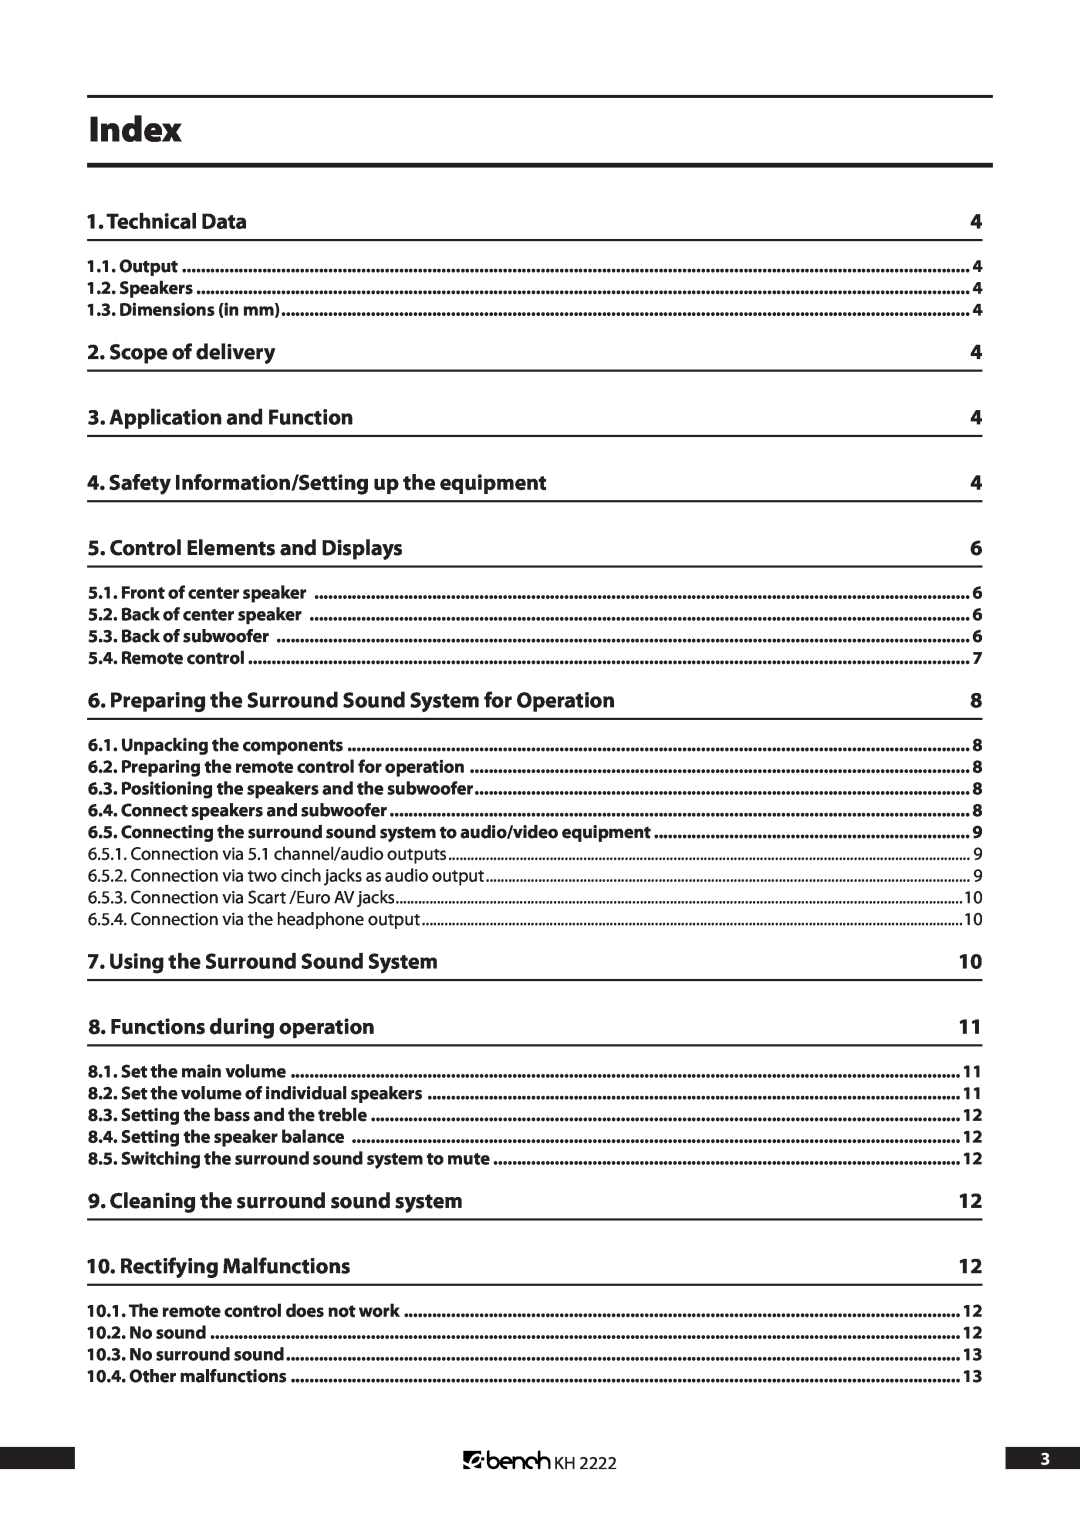 Kompernass KH 2222 manual Index 